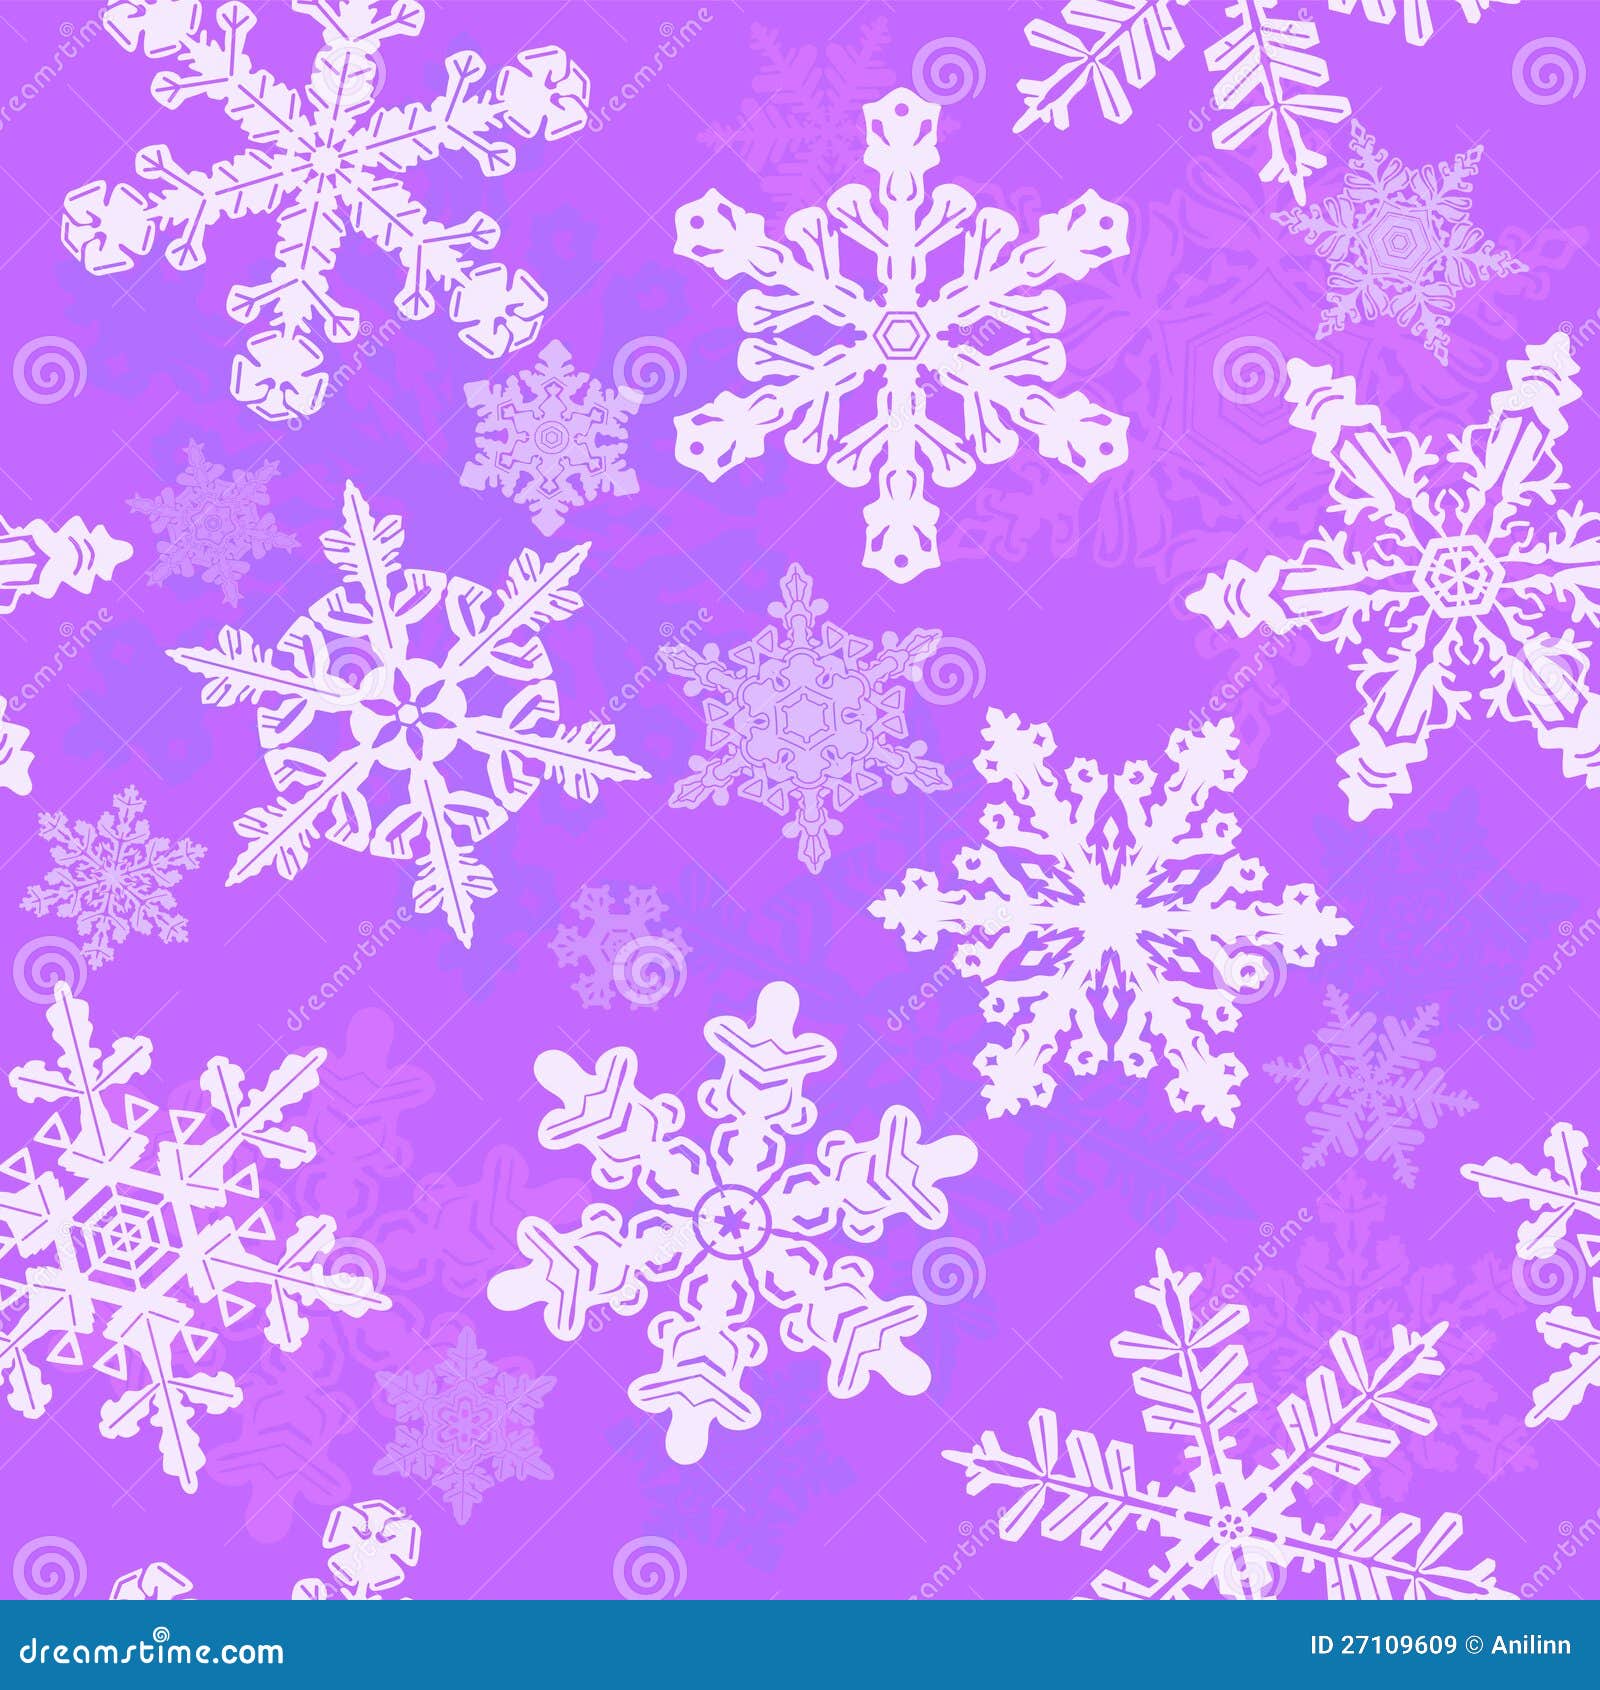 Purple snowflakes seamless stock vector. Illustration of violet - 27109609